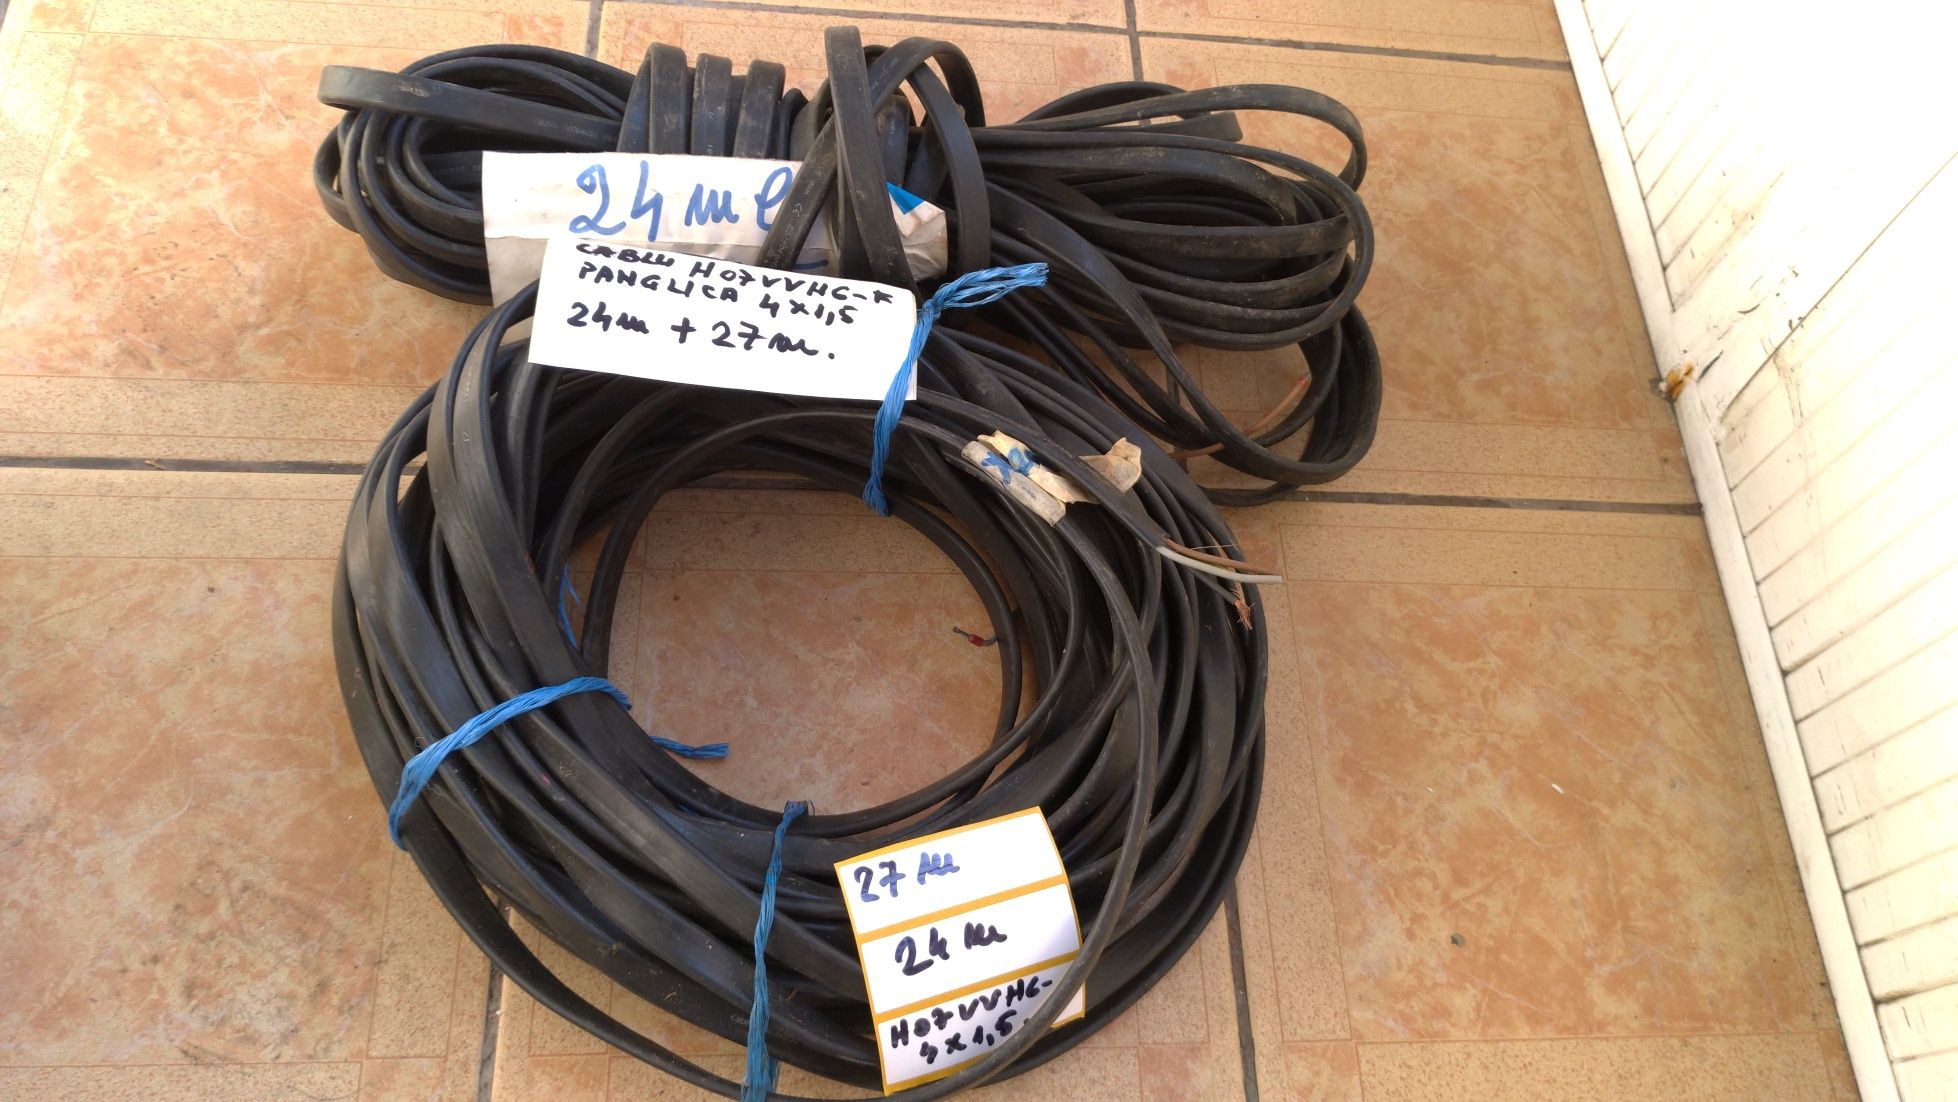 Cablu panglica 4 ori 1,5 mm ,27 +24 metri